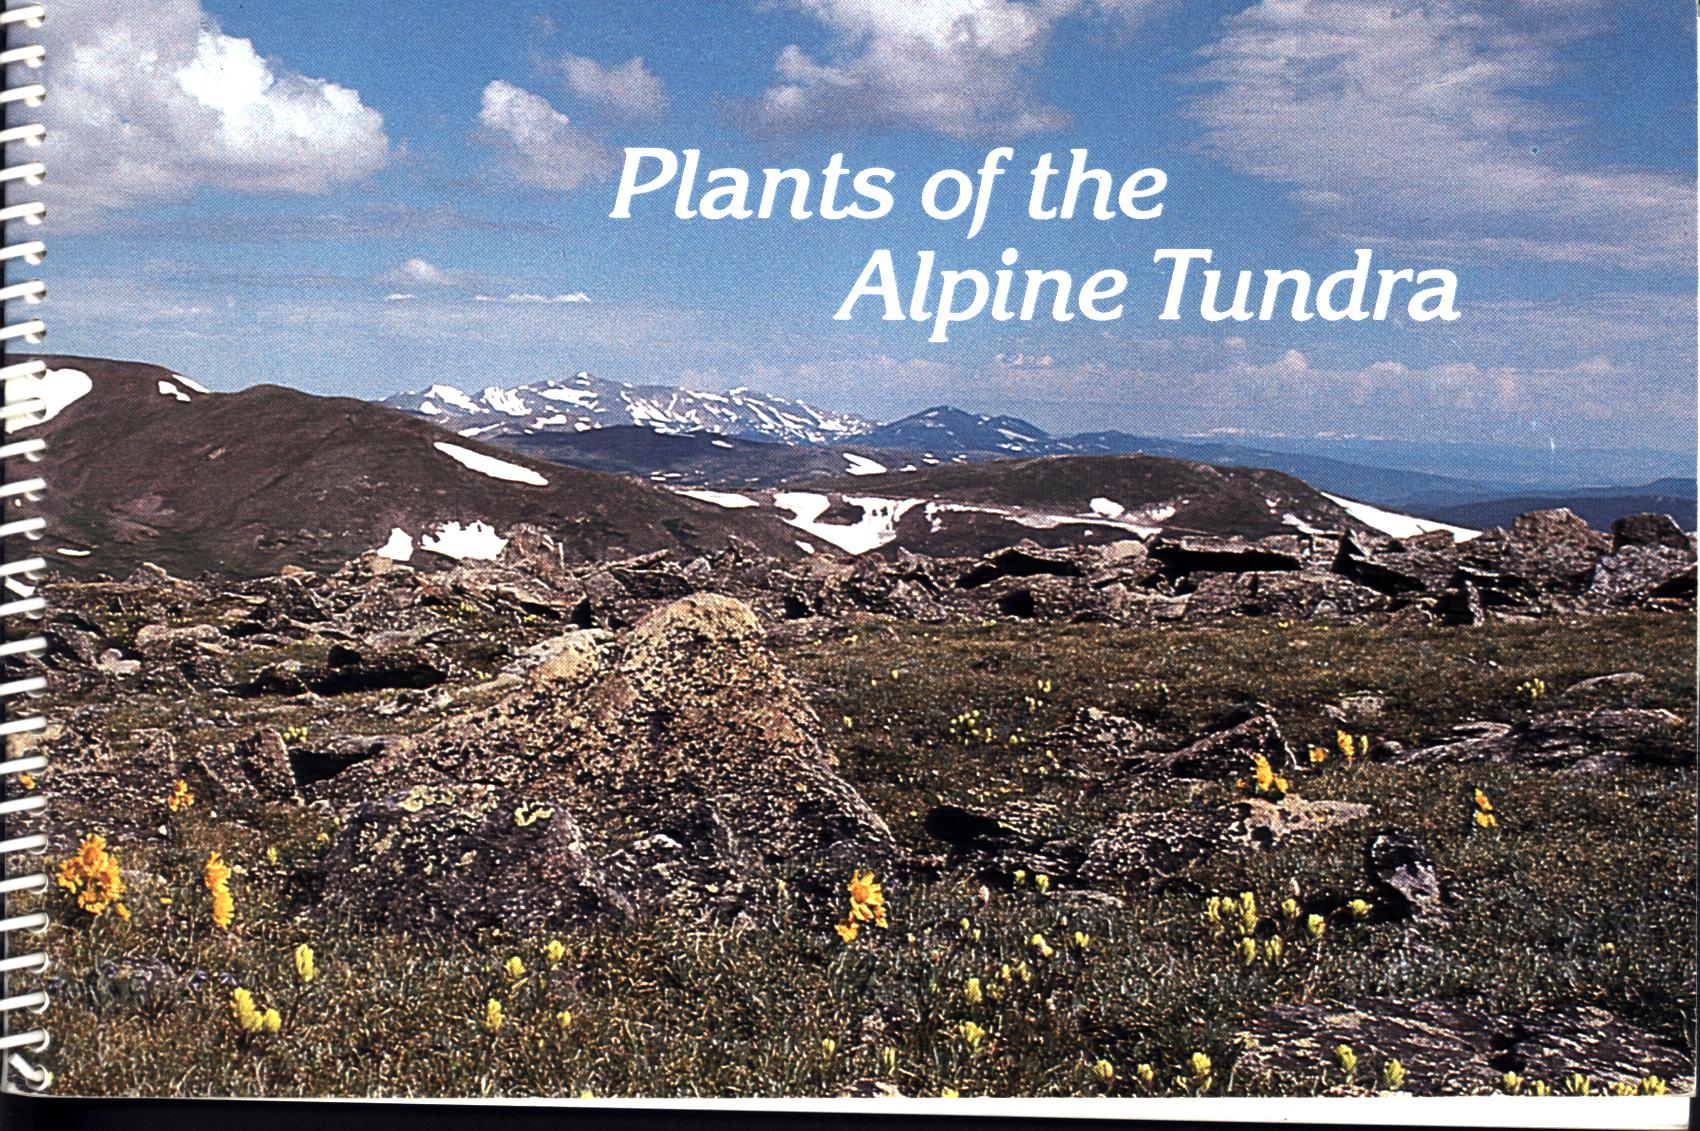 PLANTS OF THE ALPINE TUNDRA.